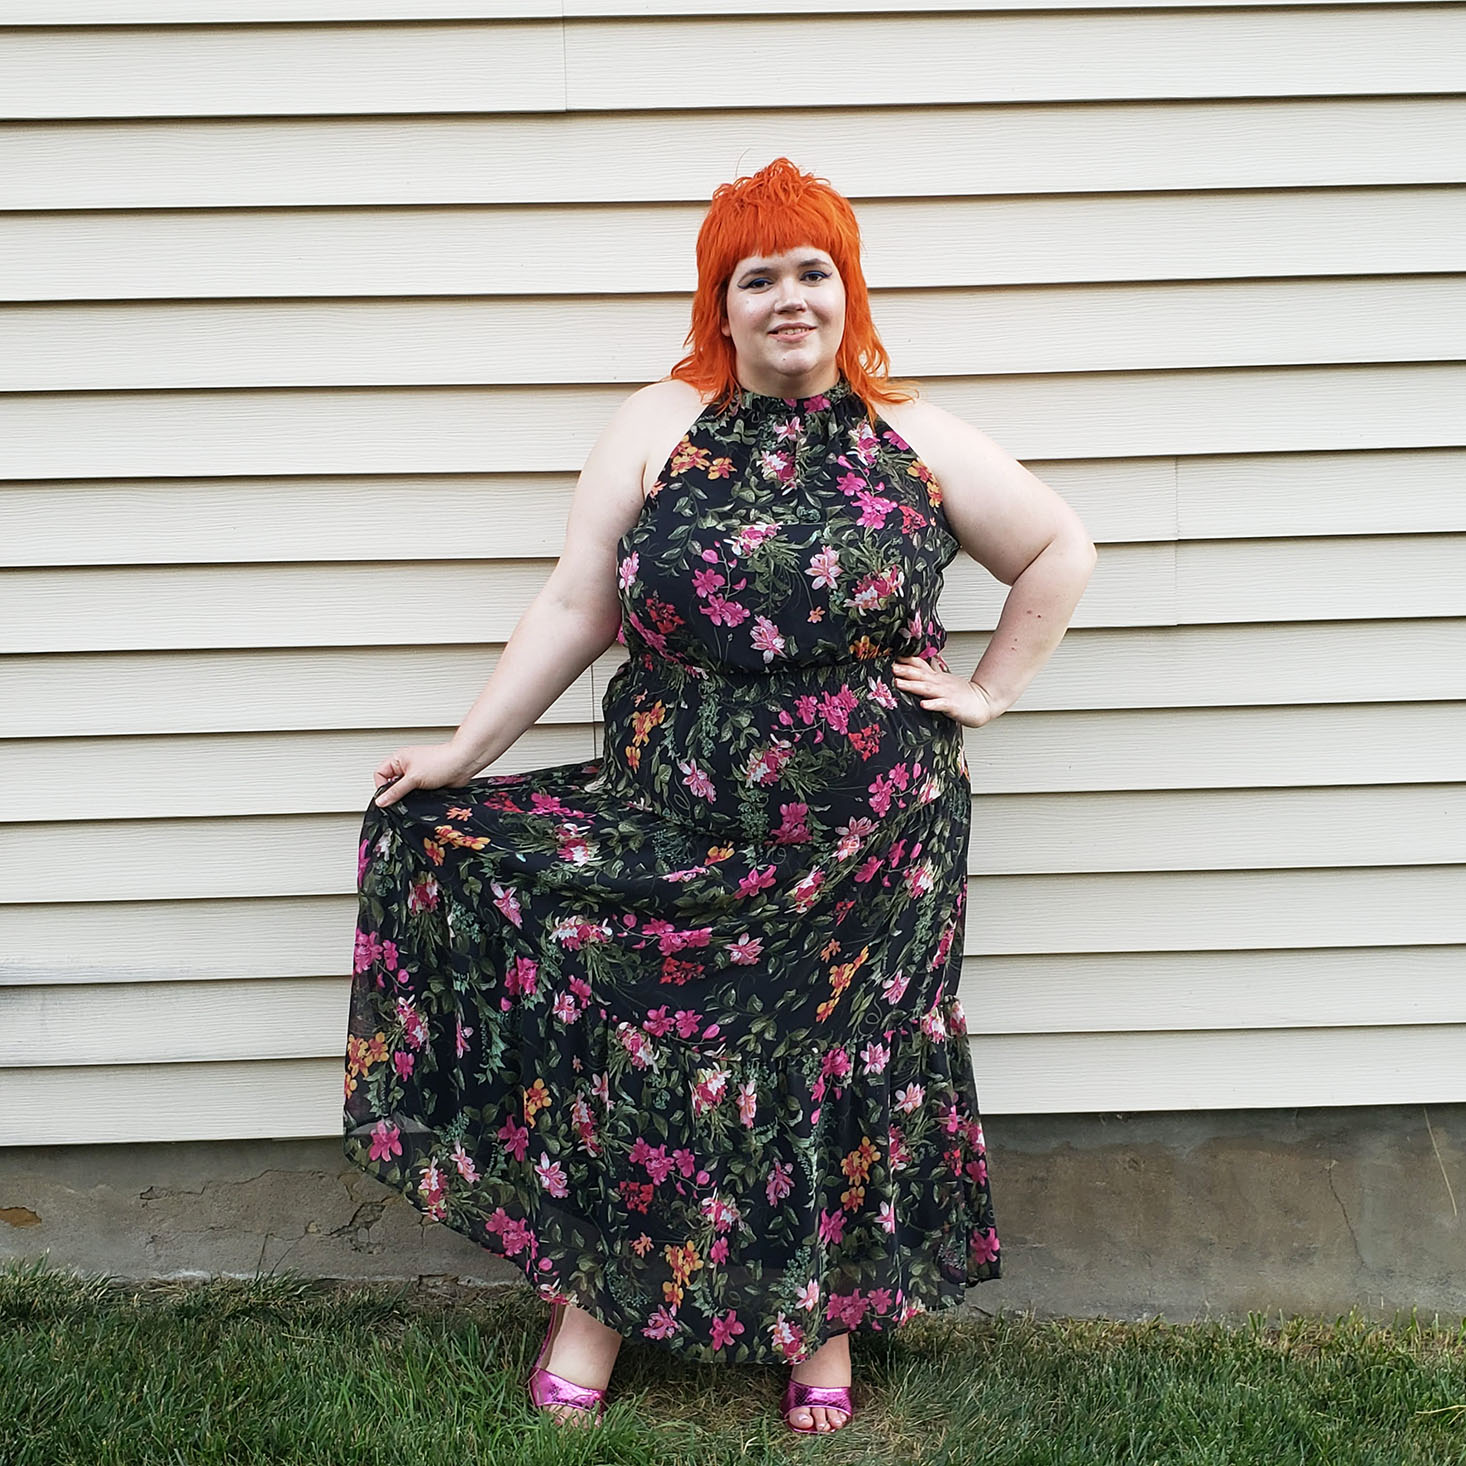 Dia & Co Plus Size Clothing Box Review: Gorgeous Summer Dresses